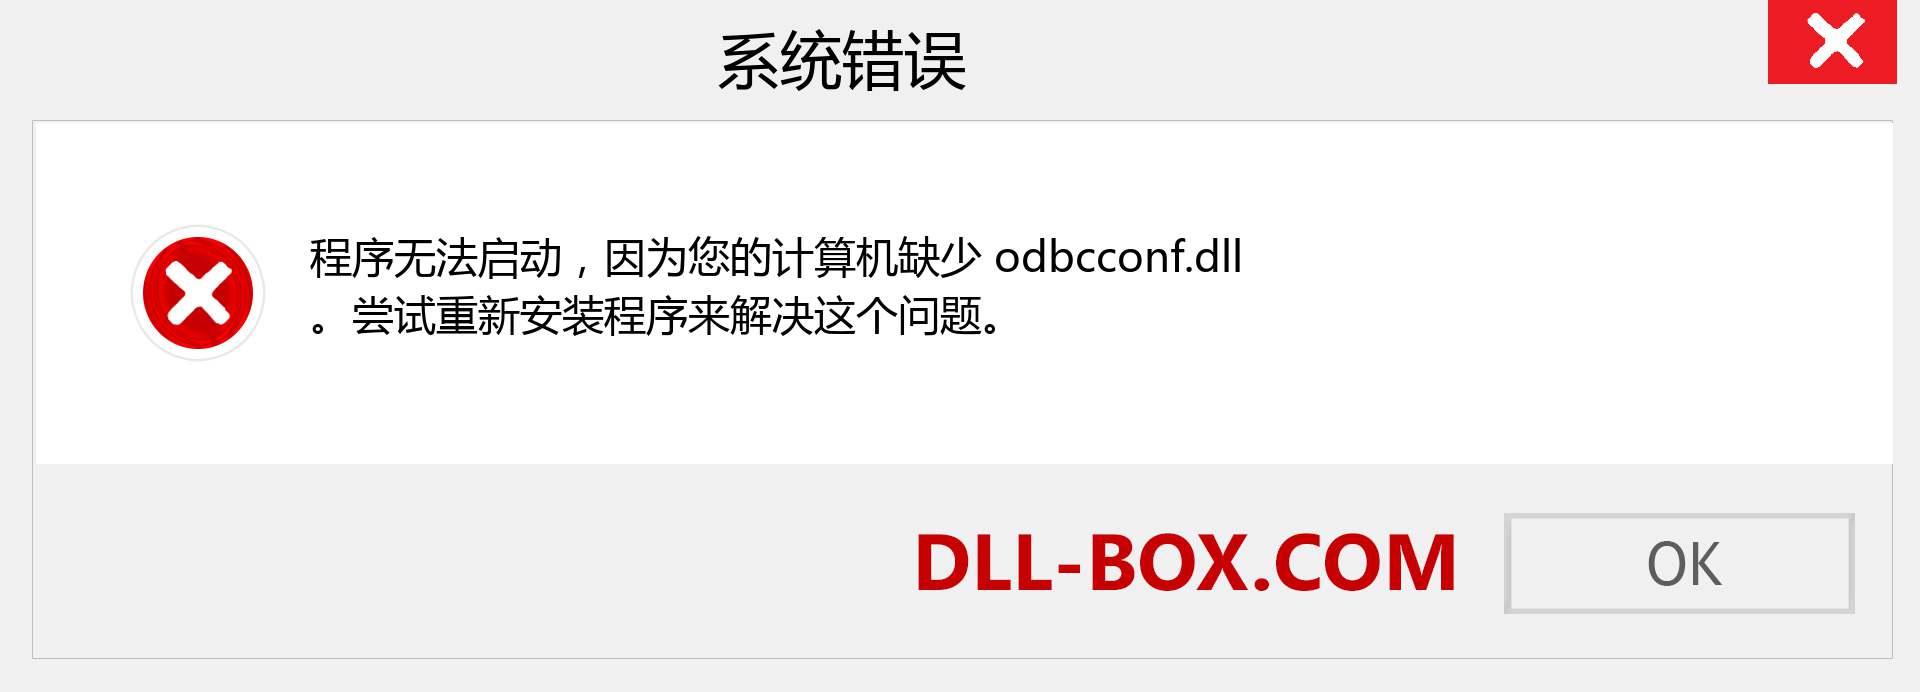 odbcconf.dll 文件丢失？。 适用于 Windows 7、8、10 的下载 - 修复 Windows、照片、图像上的 odbcconf dll 丢失错误